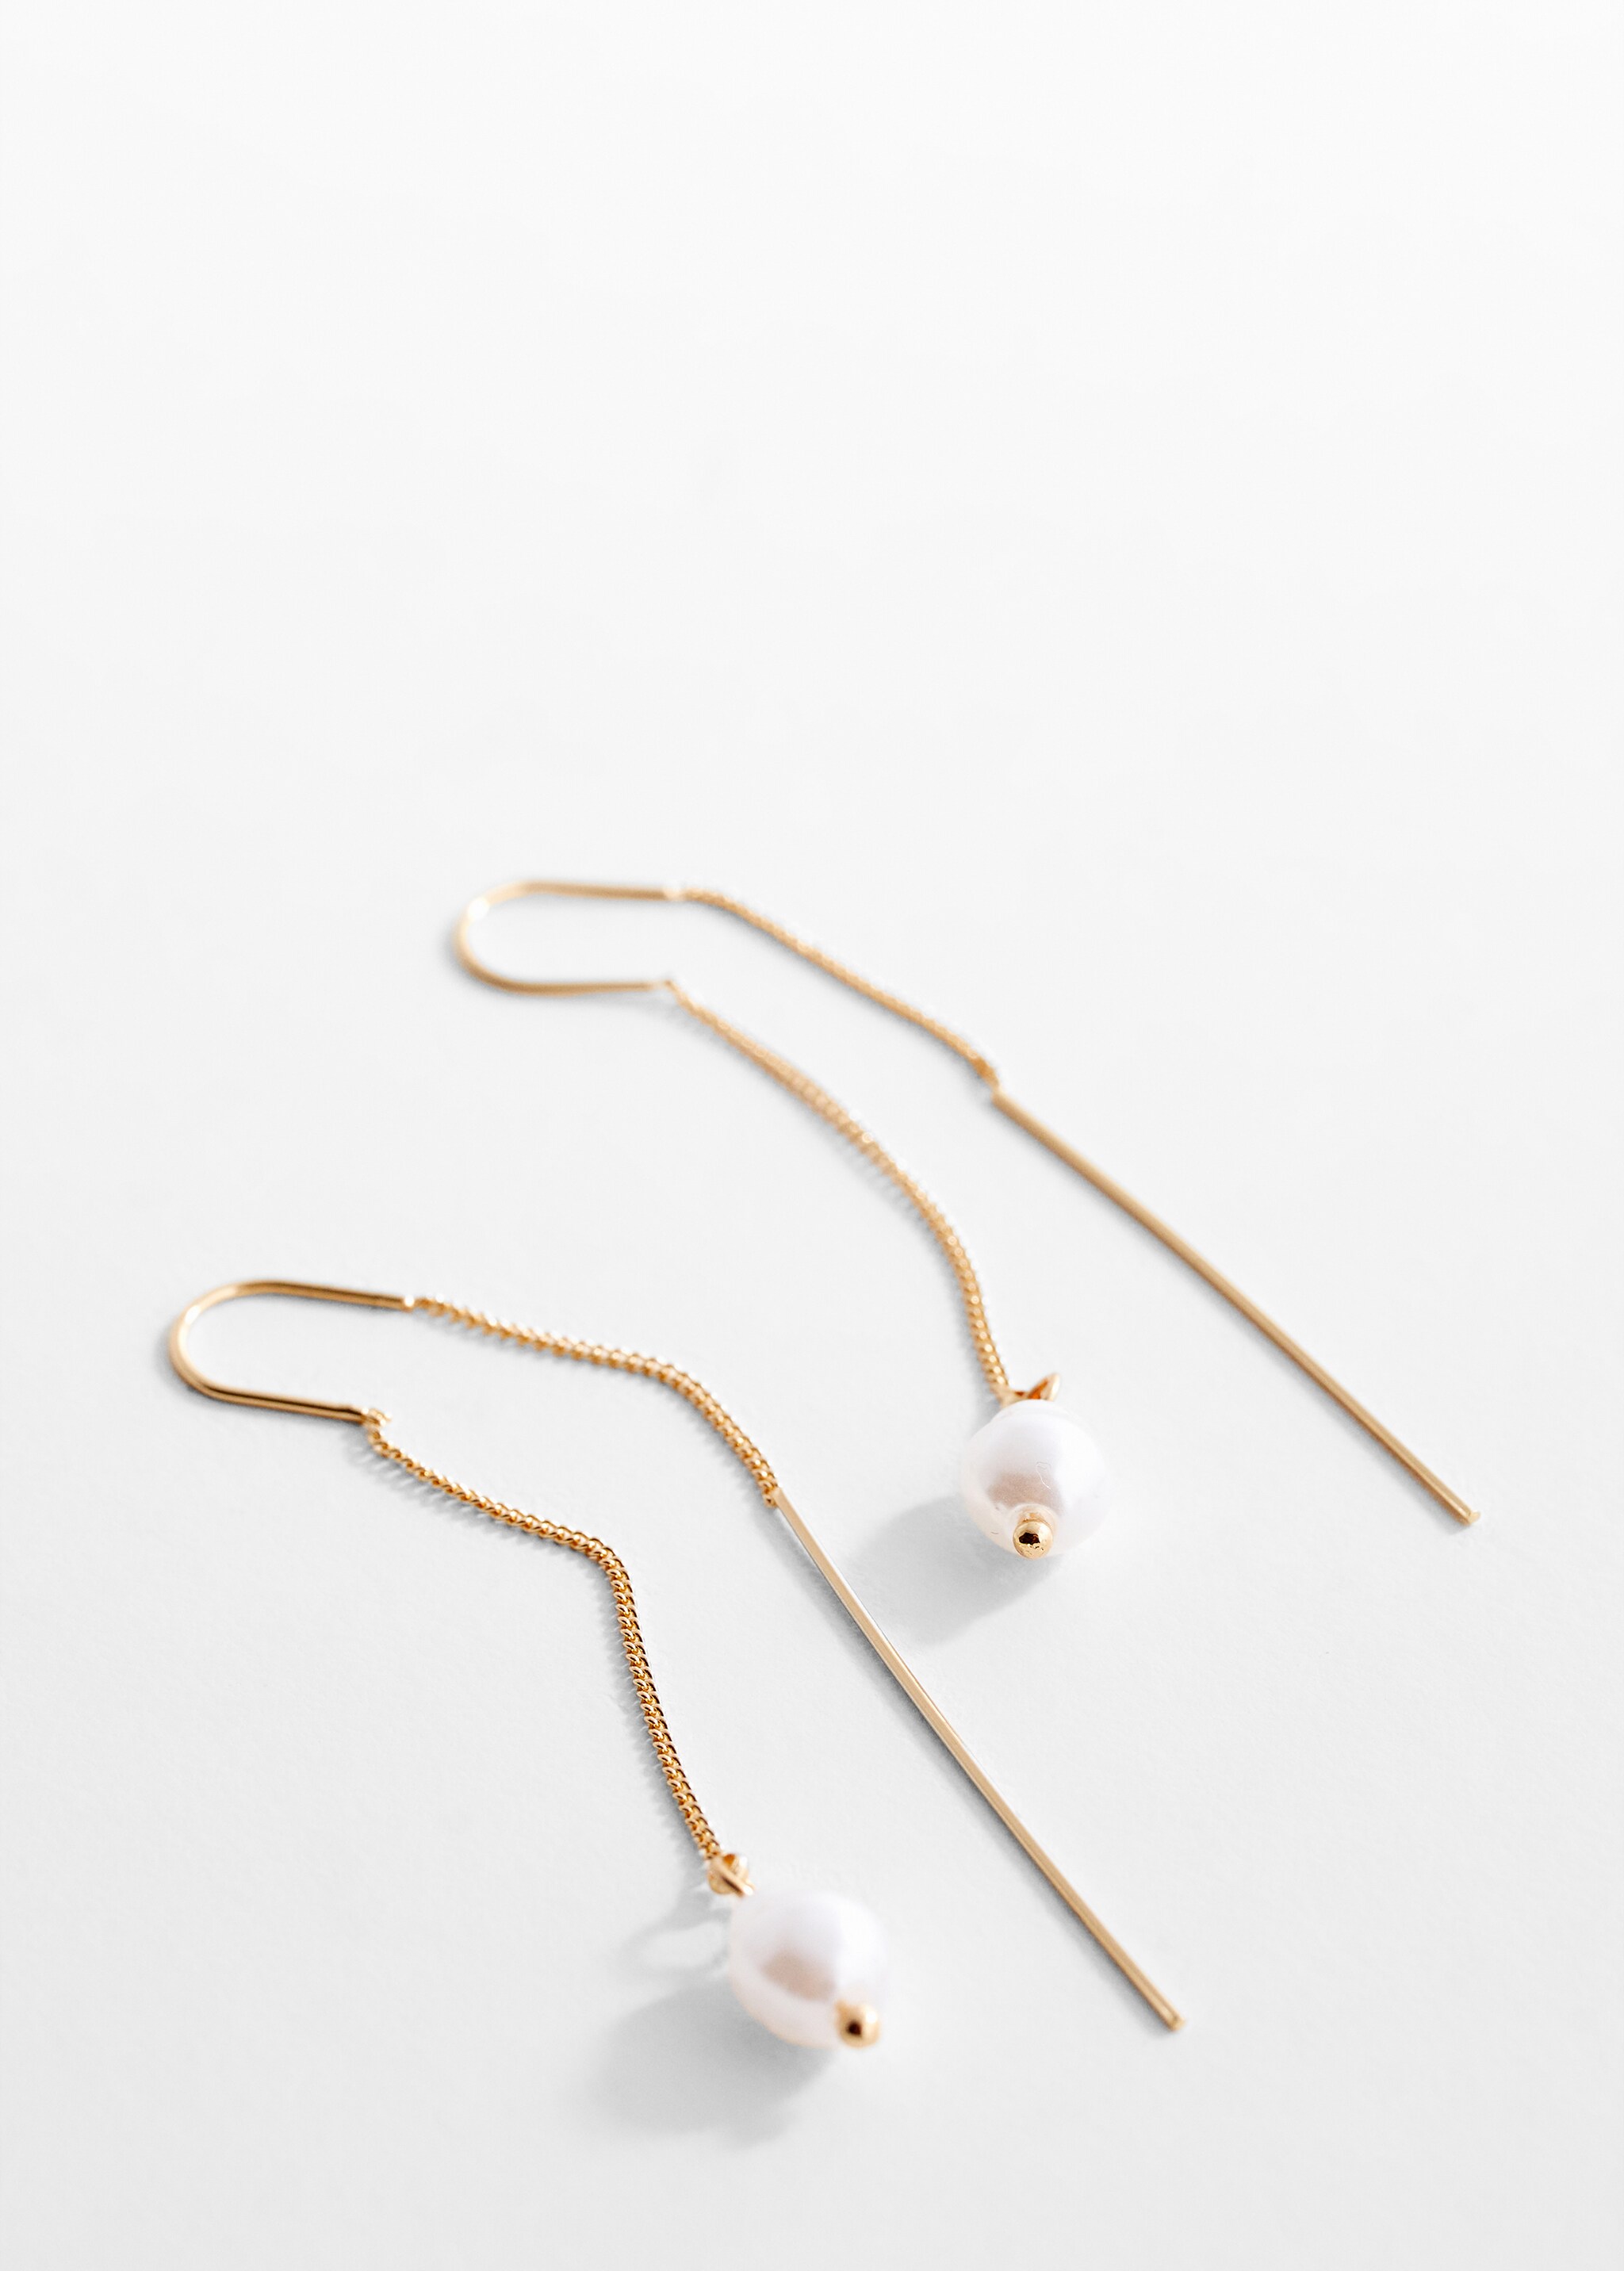 Pearl thread earrings - Medium plane